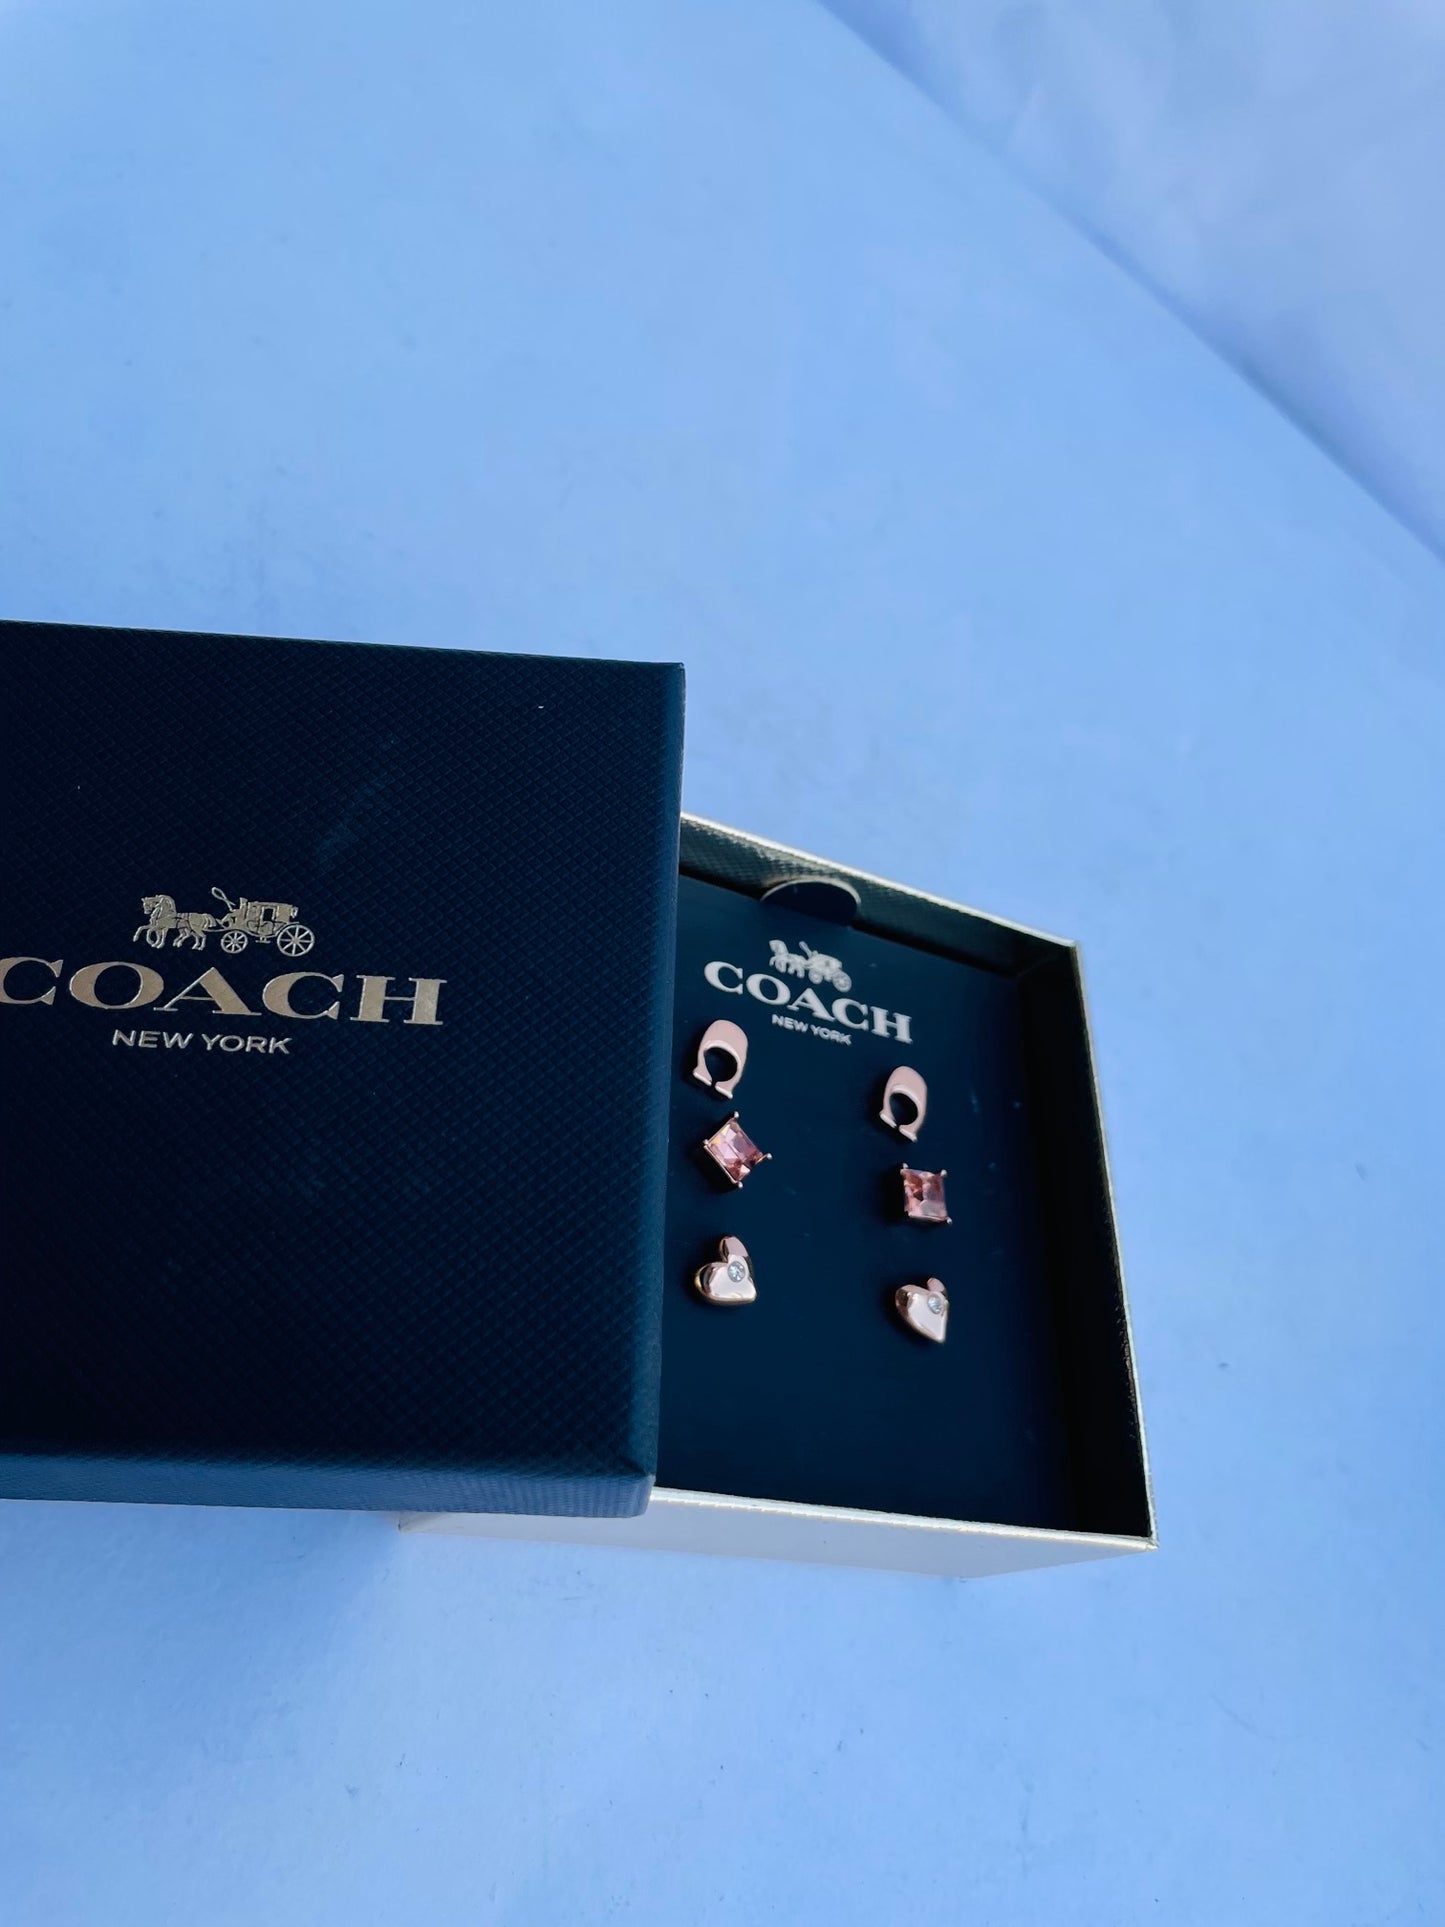 Coach earring sets